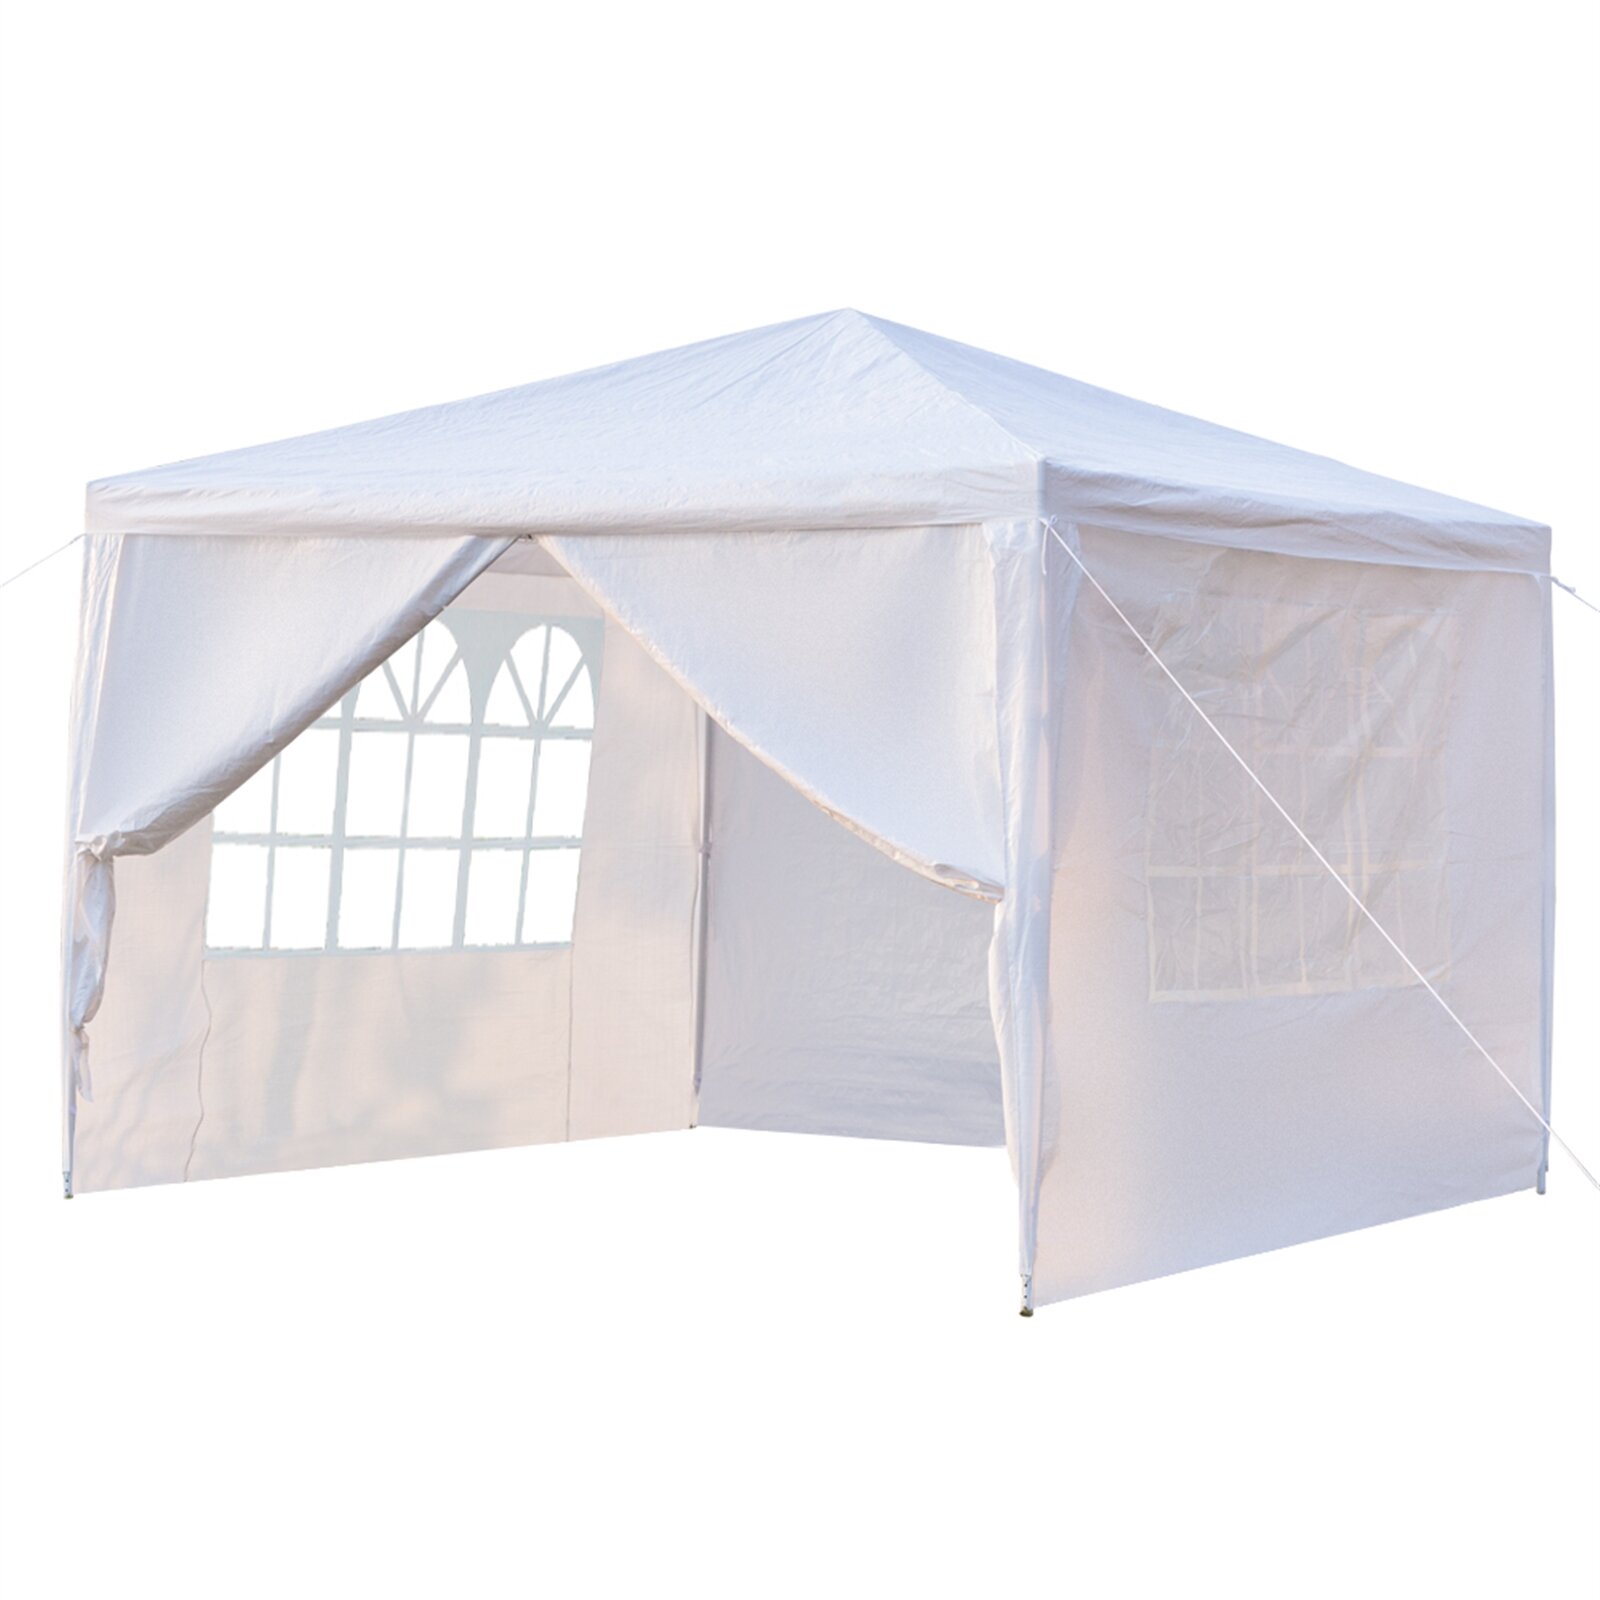 [US / UK / FR Direct] مخيمات البقاء على قيد الحياة 3 × 3 م أربعة جوانب مظلة مظلة محمولة أبواب مزدوجة للاستخدام المنزلي ضد للماء مأوى خيمة مع أنابيب ل